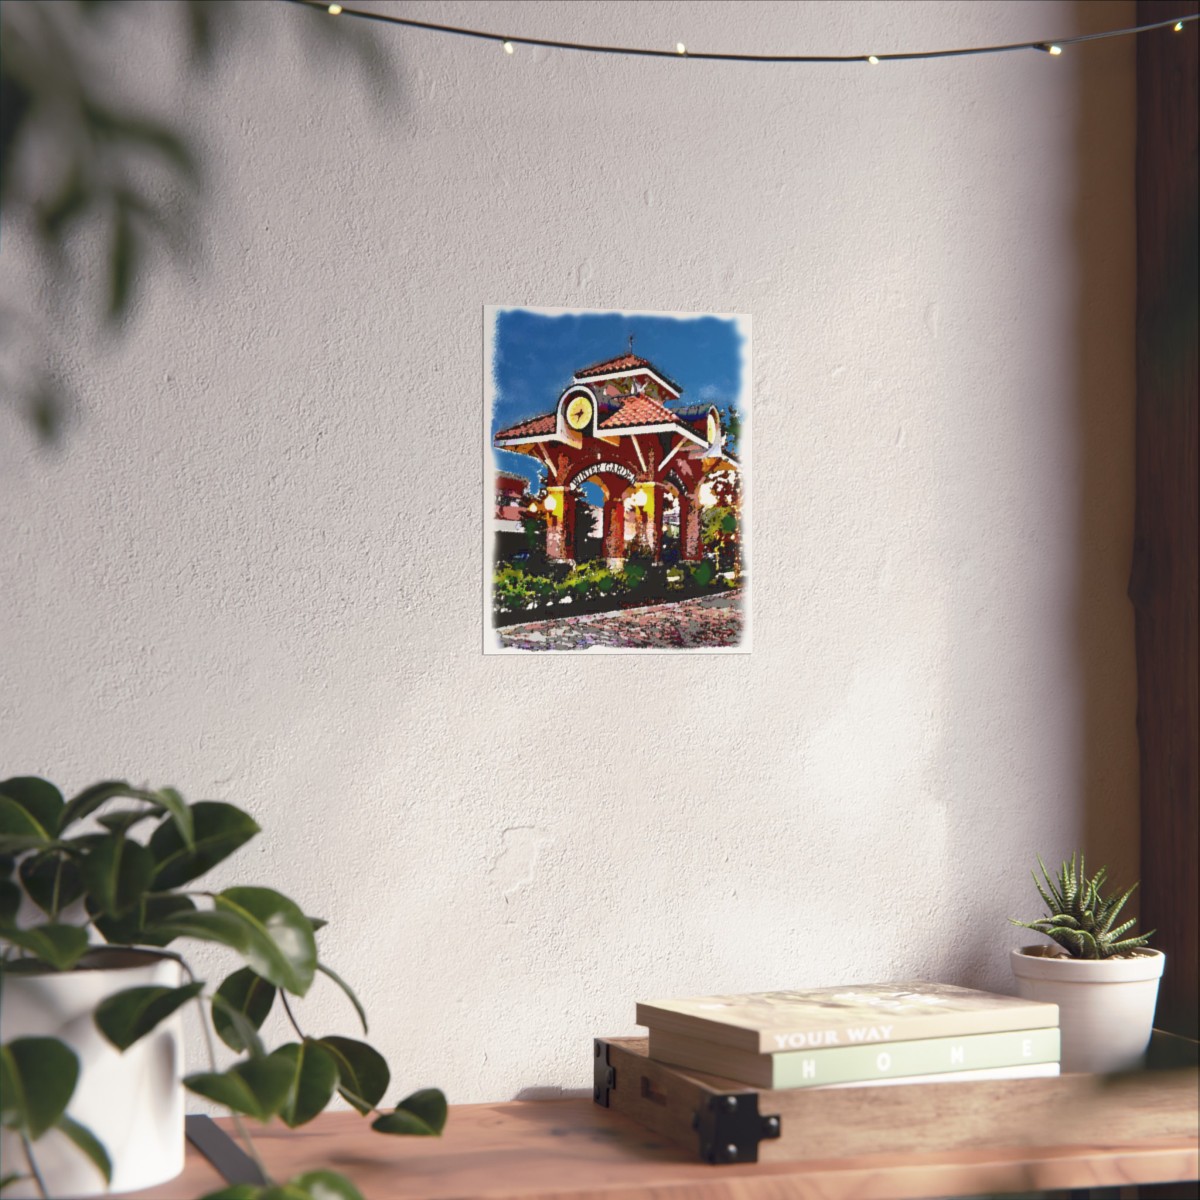 Downtown Winter Garden Clock Tower Art Print On Premium Matte Paper product thumbnail image